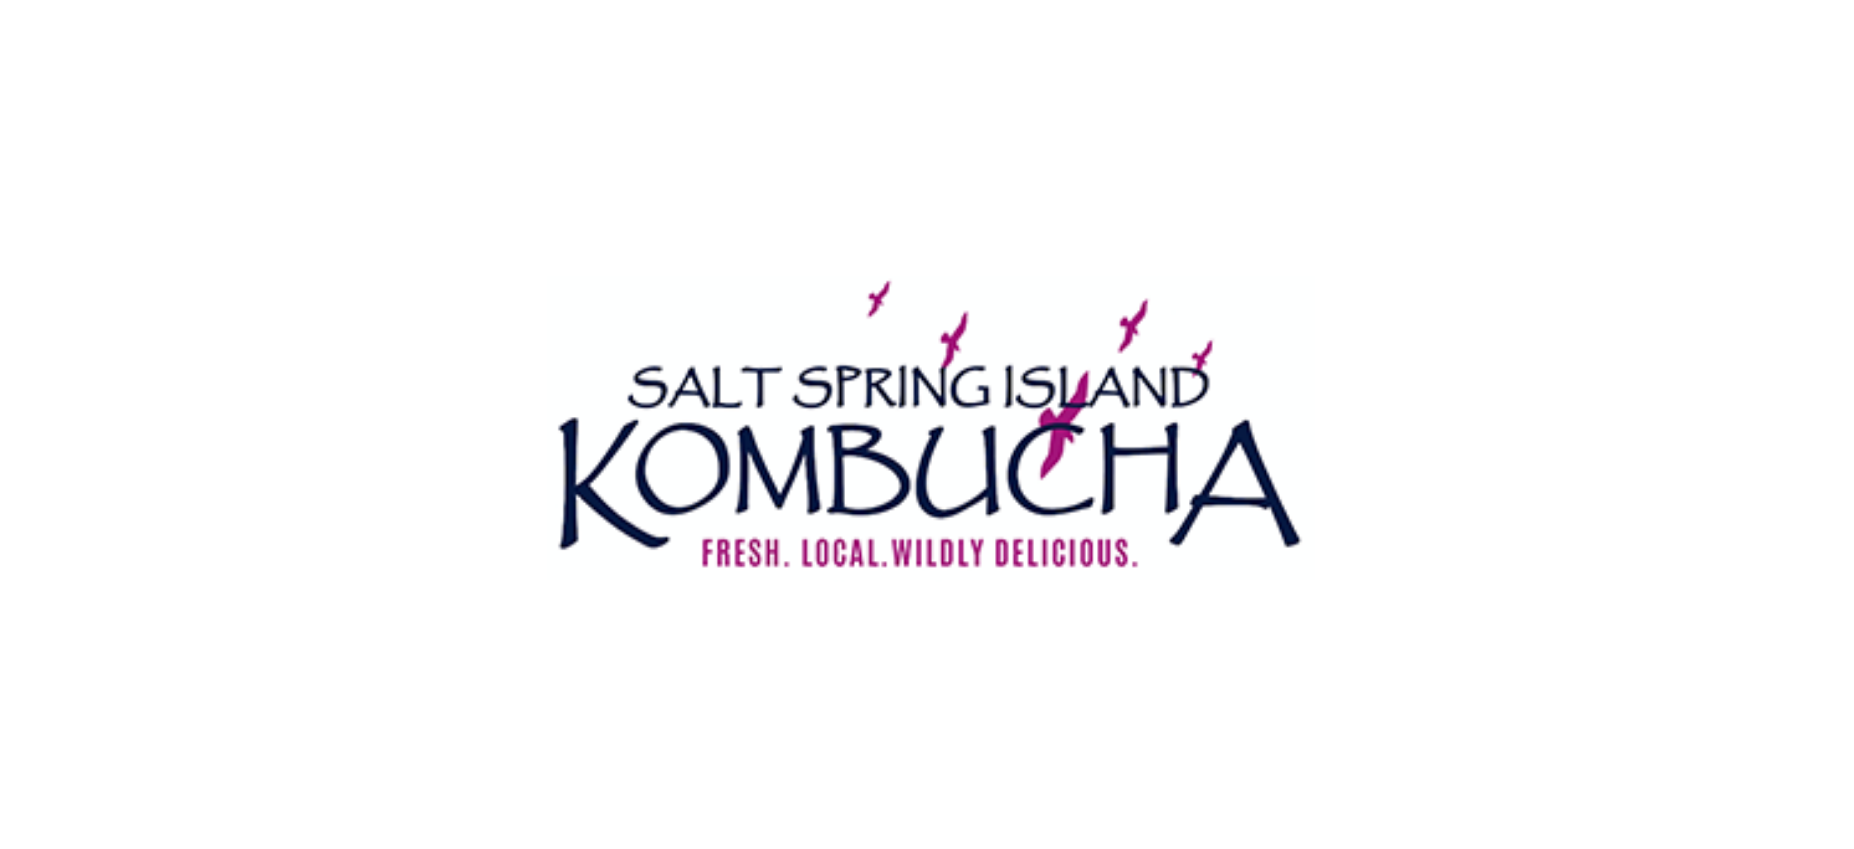 Herbal Bliss in a Bottle - Salt Spring Island Kombucha